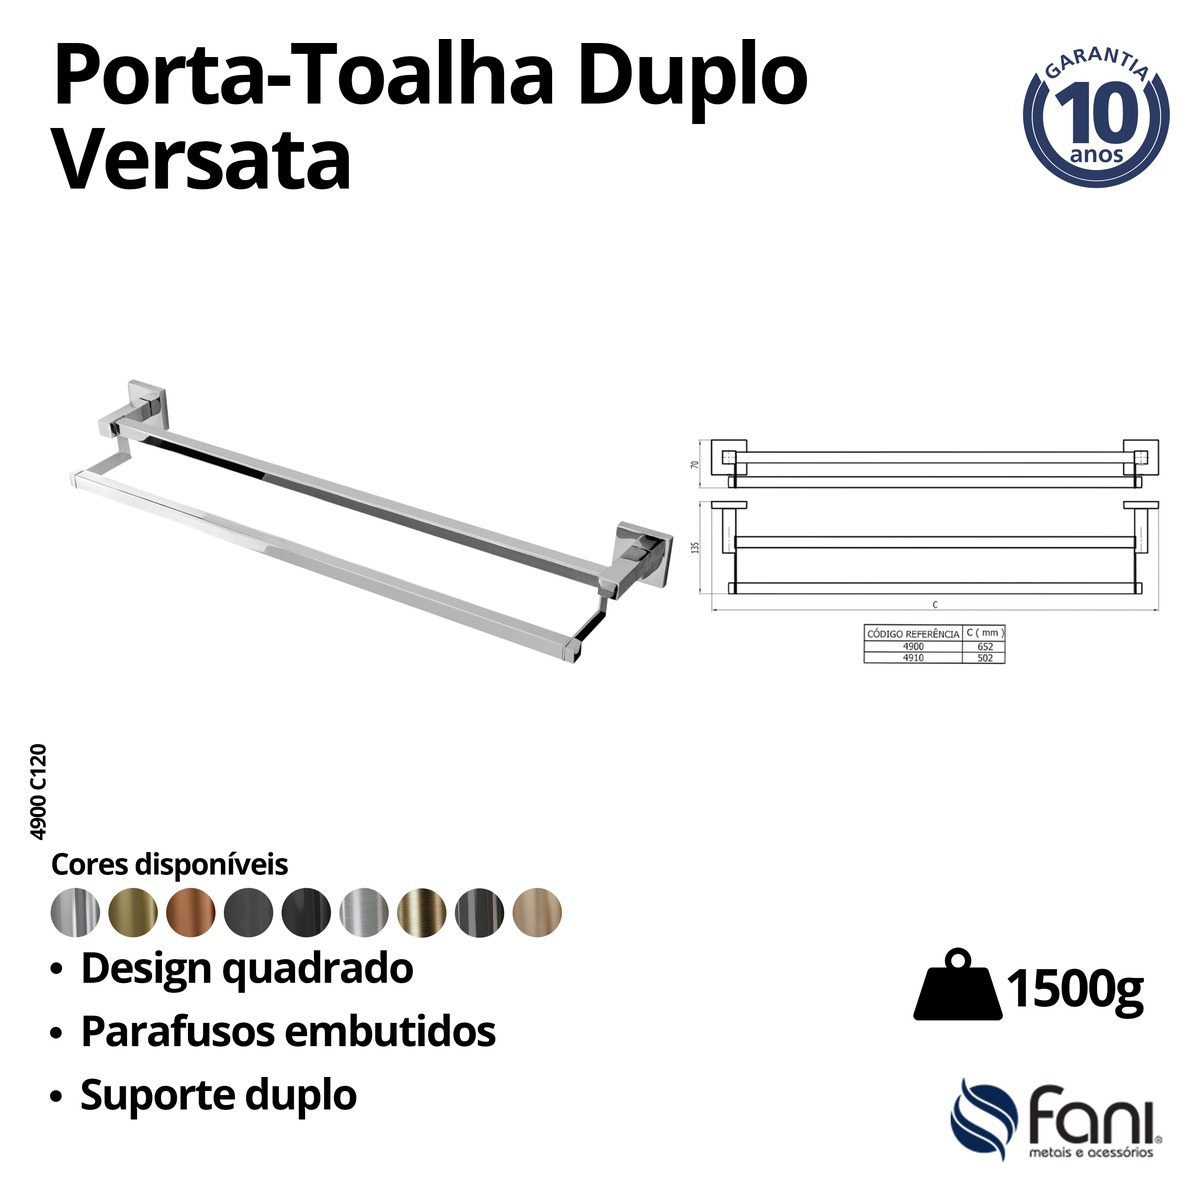 Porta Toalha Reto Longo 65,2cm Duplo Versata 4900DV120 D'oro Vecchio Fani